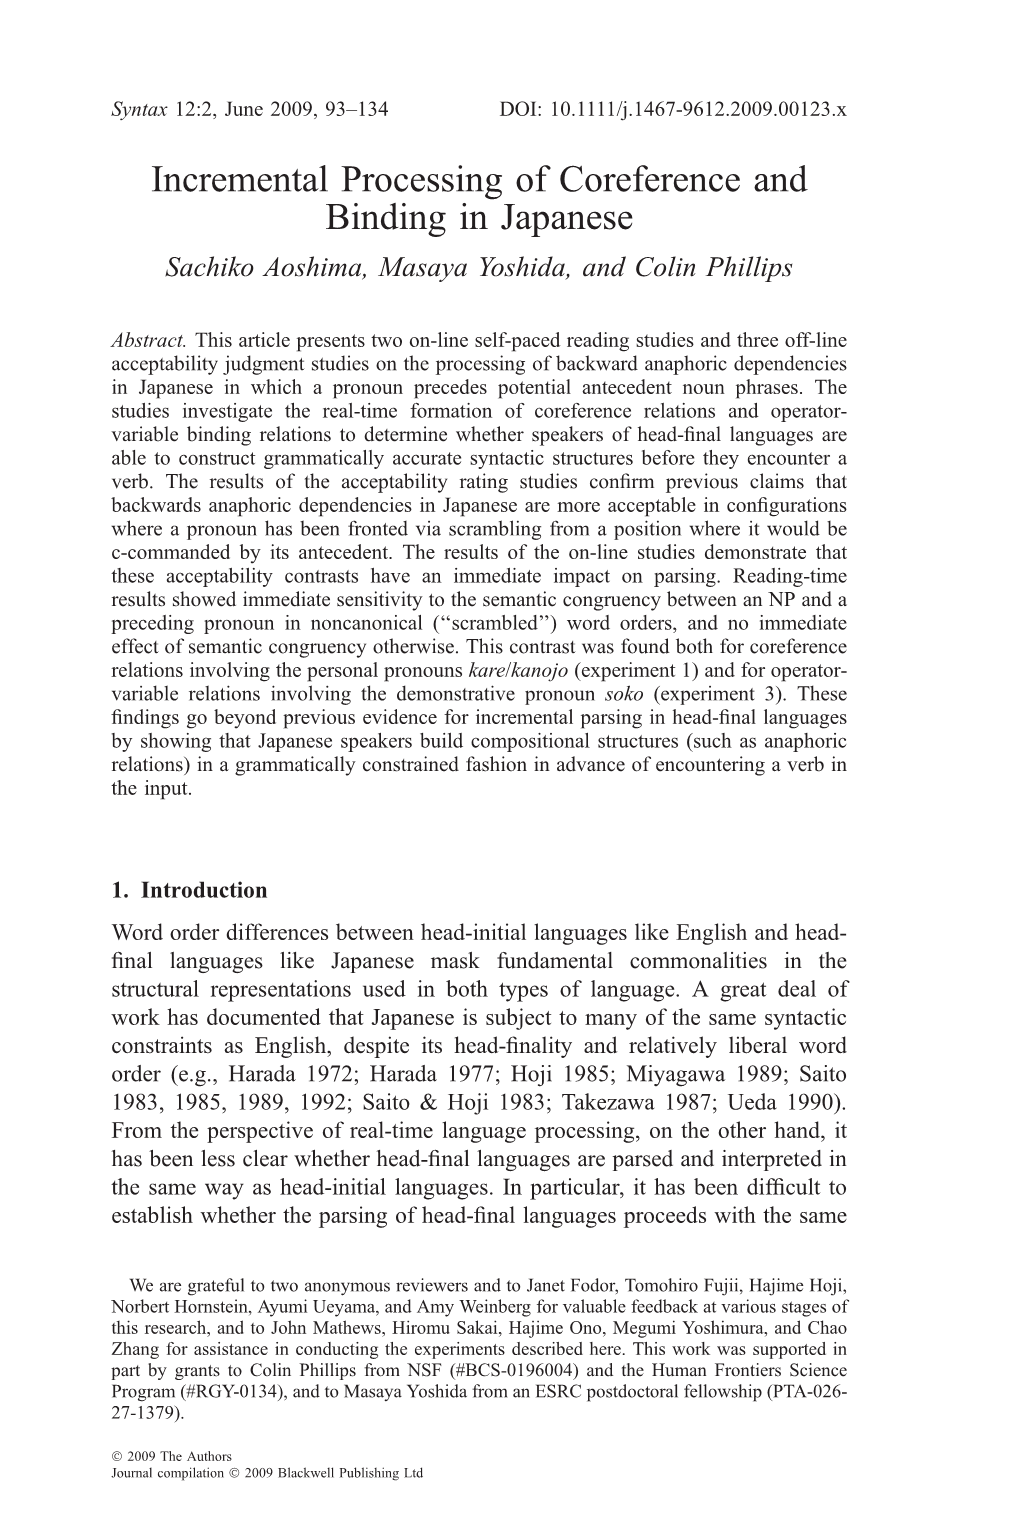 Incremental Processing of Coreference and Binding in Japanese Sachiko Aoshima, Masaya Yoshida, and Colin Phillips